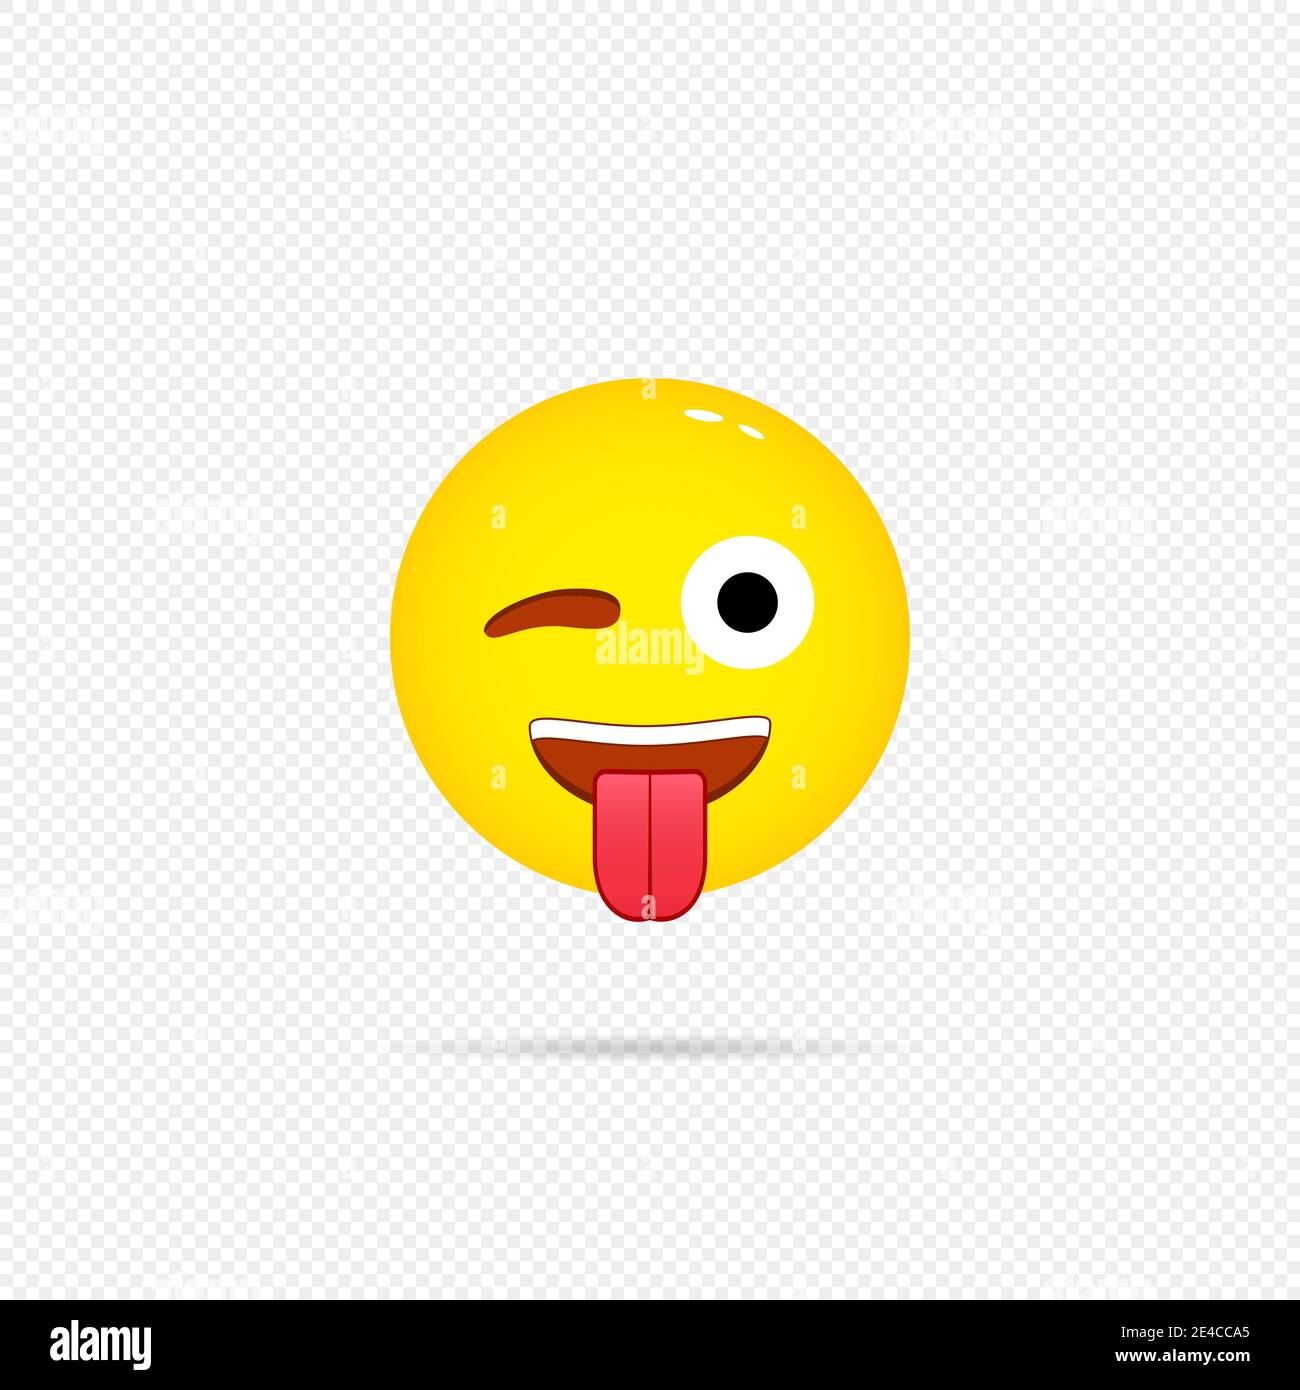 Emoji with tongue icon. Happy emotion. Stock Vector